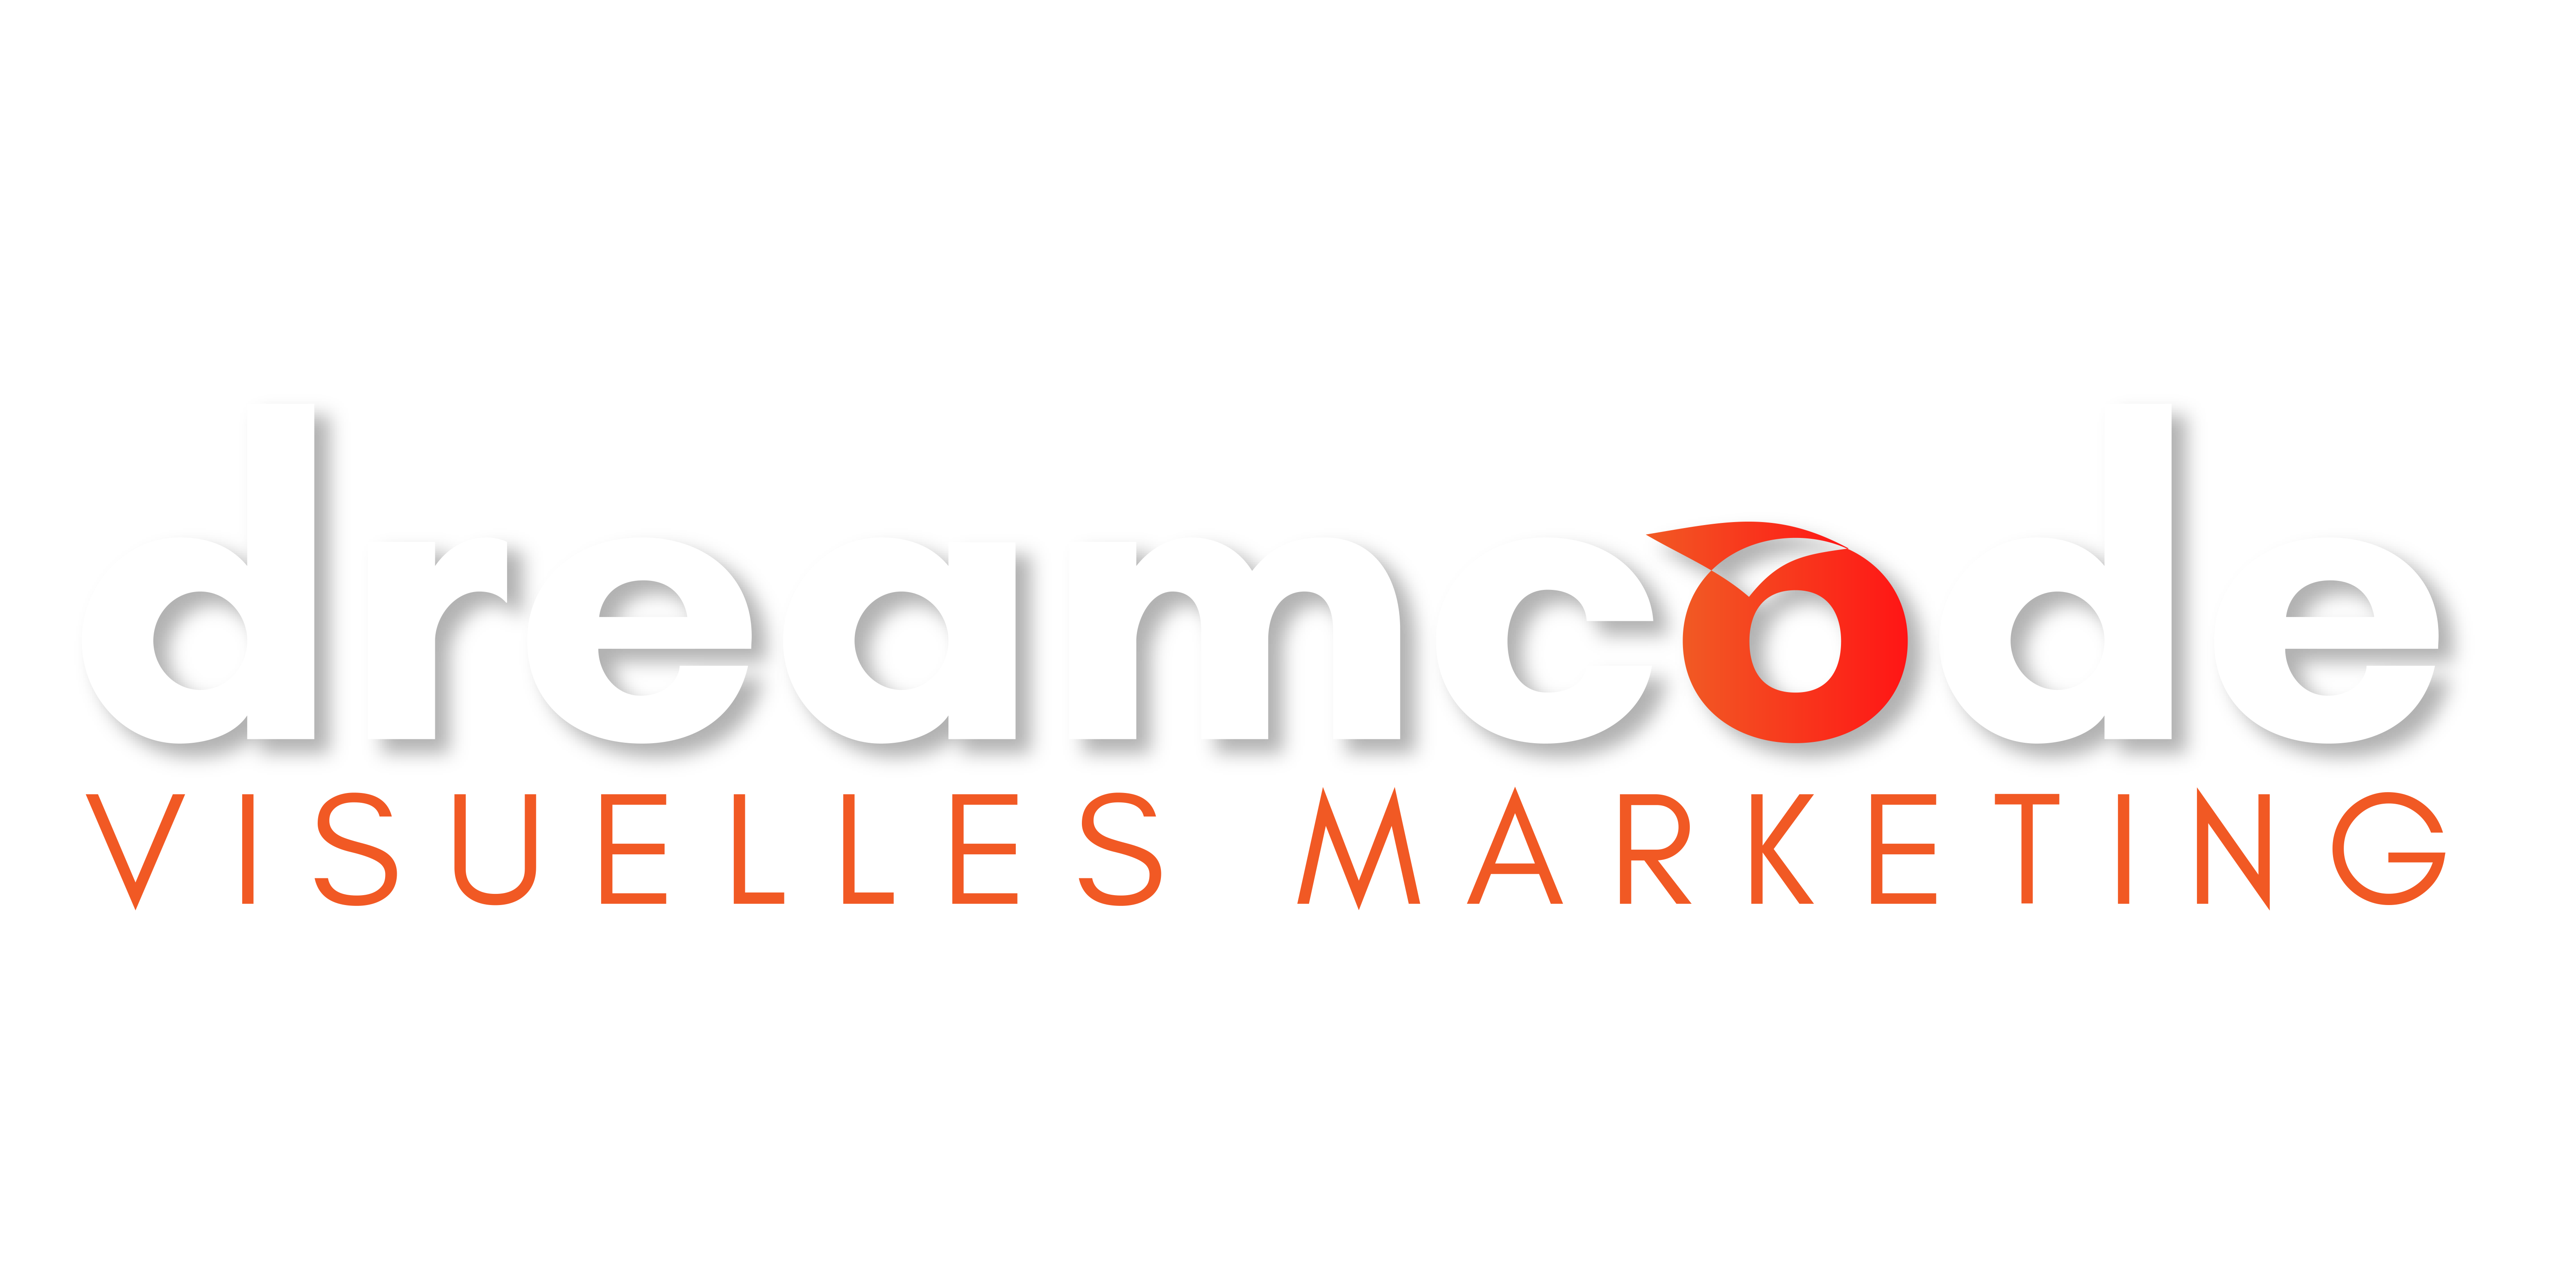 dreamcode – visuelles marketing